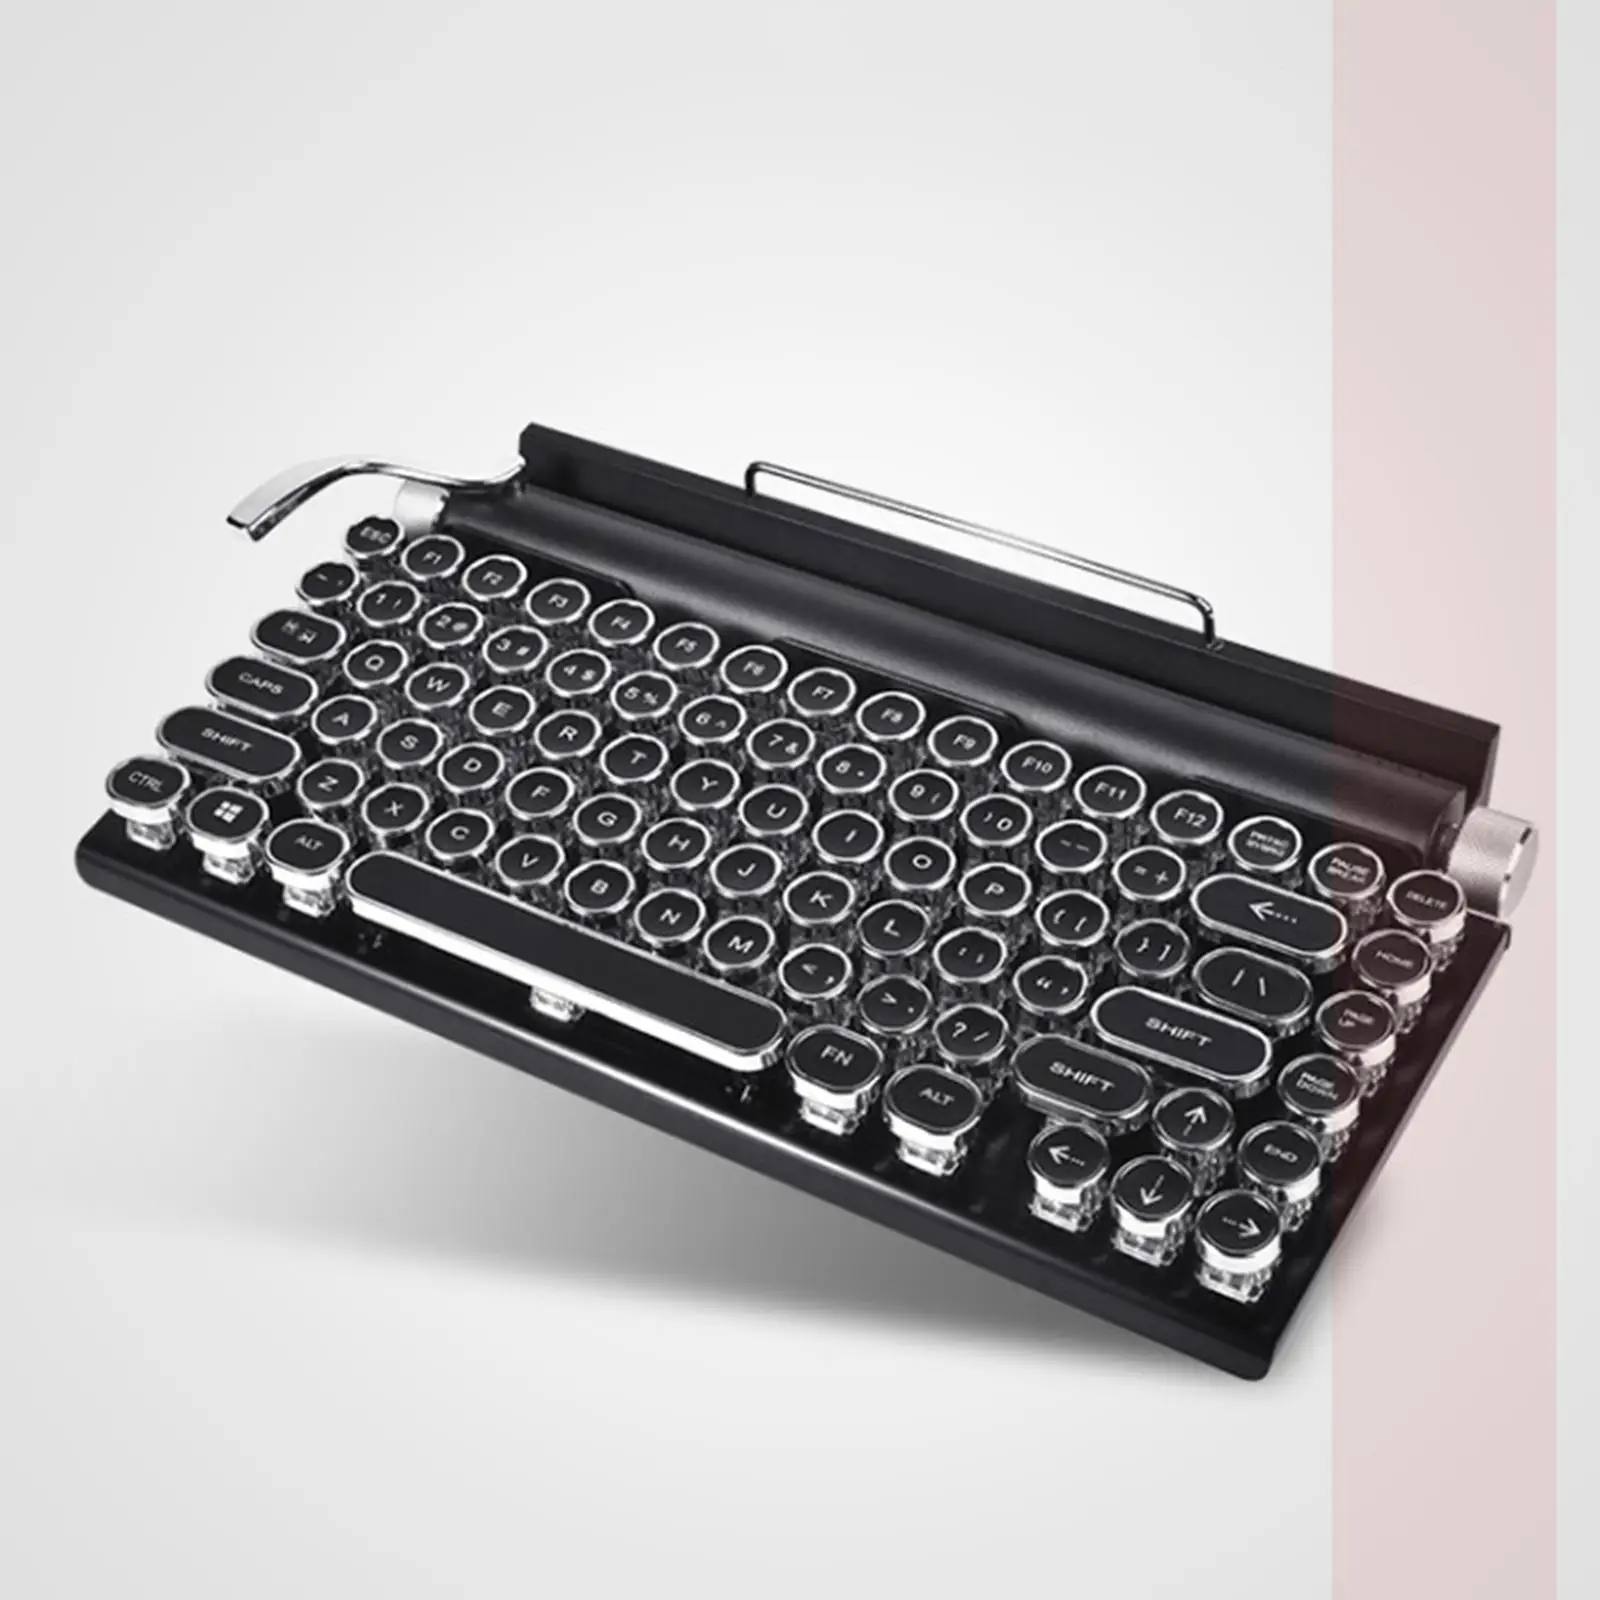 Retro Mechanical Keyboard 83 Keys BT with Backlit RGB LED Wireless Keyboard for Tablets